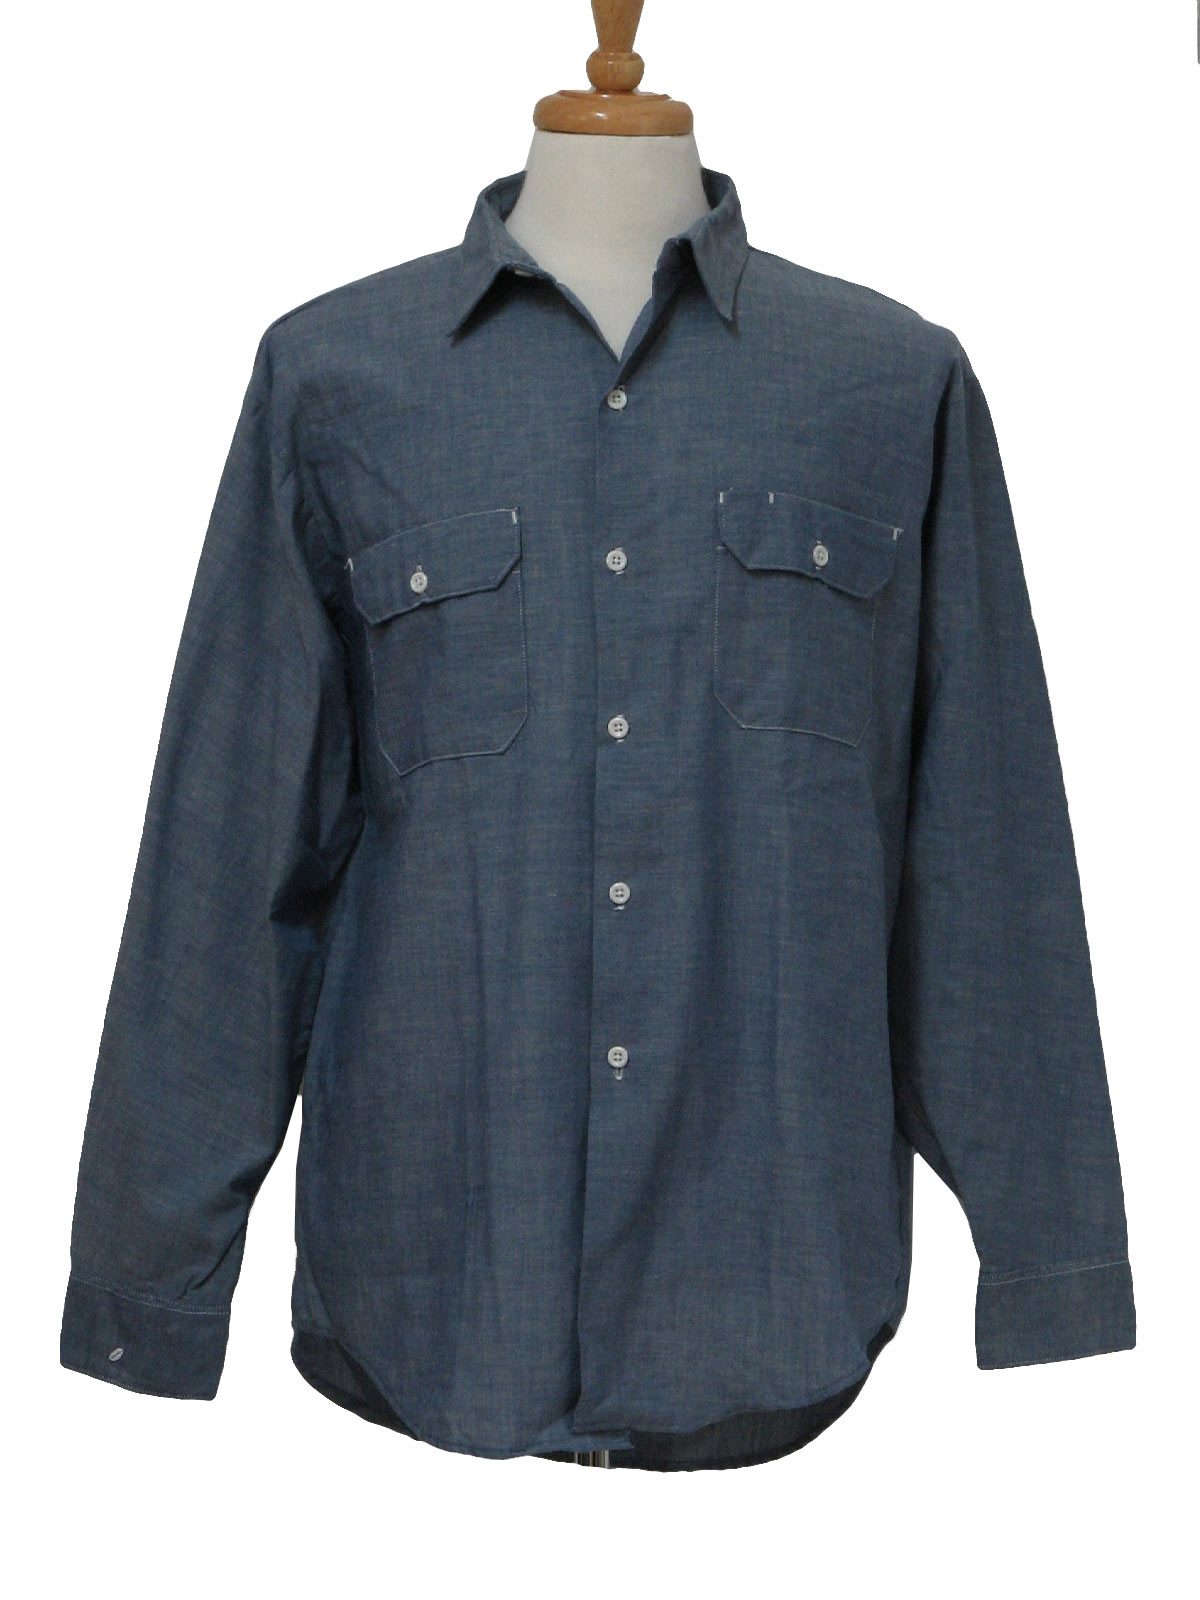 Retro 70s Shirt (Big Mac) : 70s -Big Mac- Mens blue polyester and ...